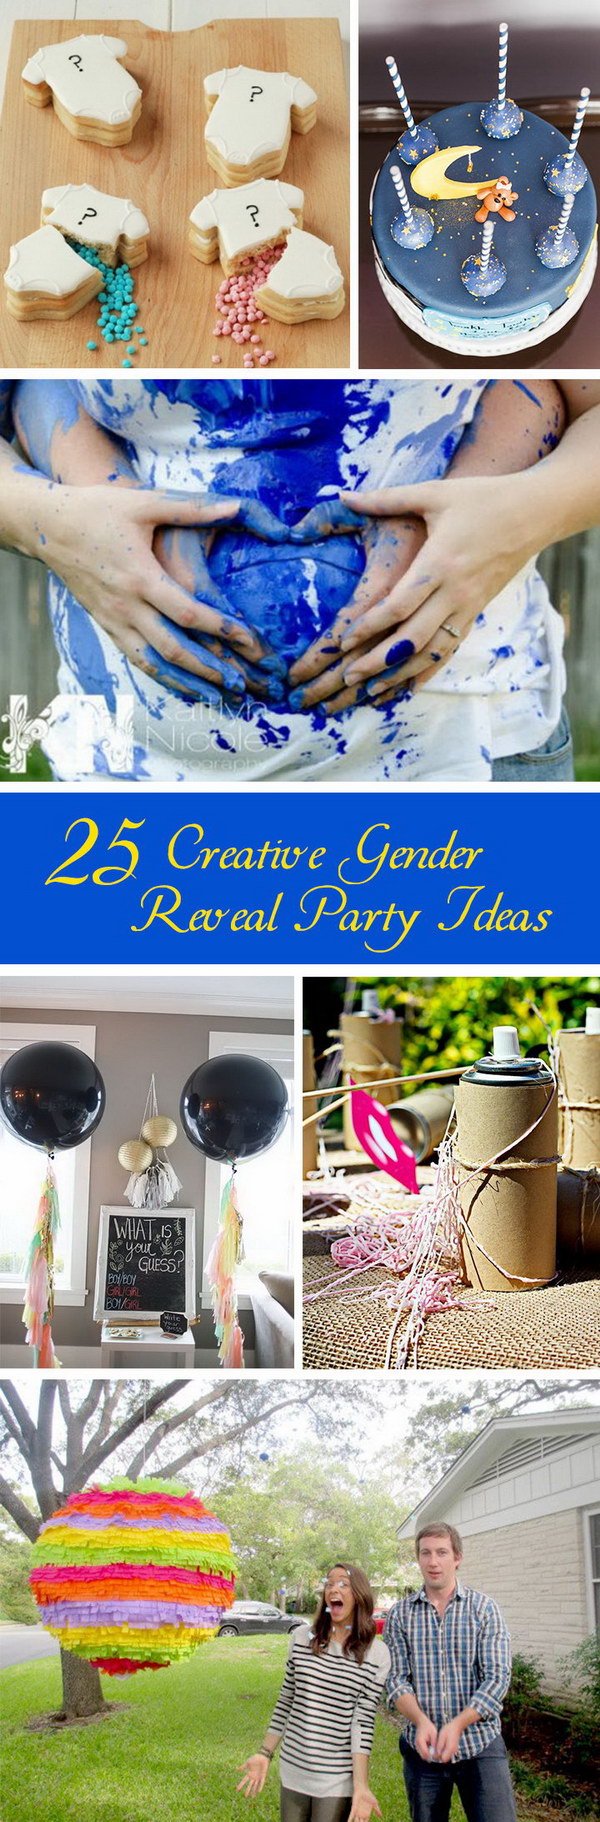 Creative gender reveals party ideas!